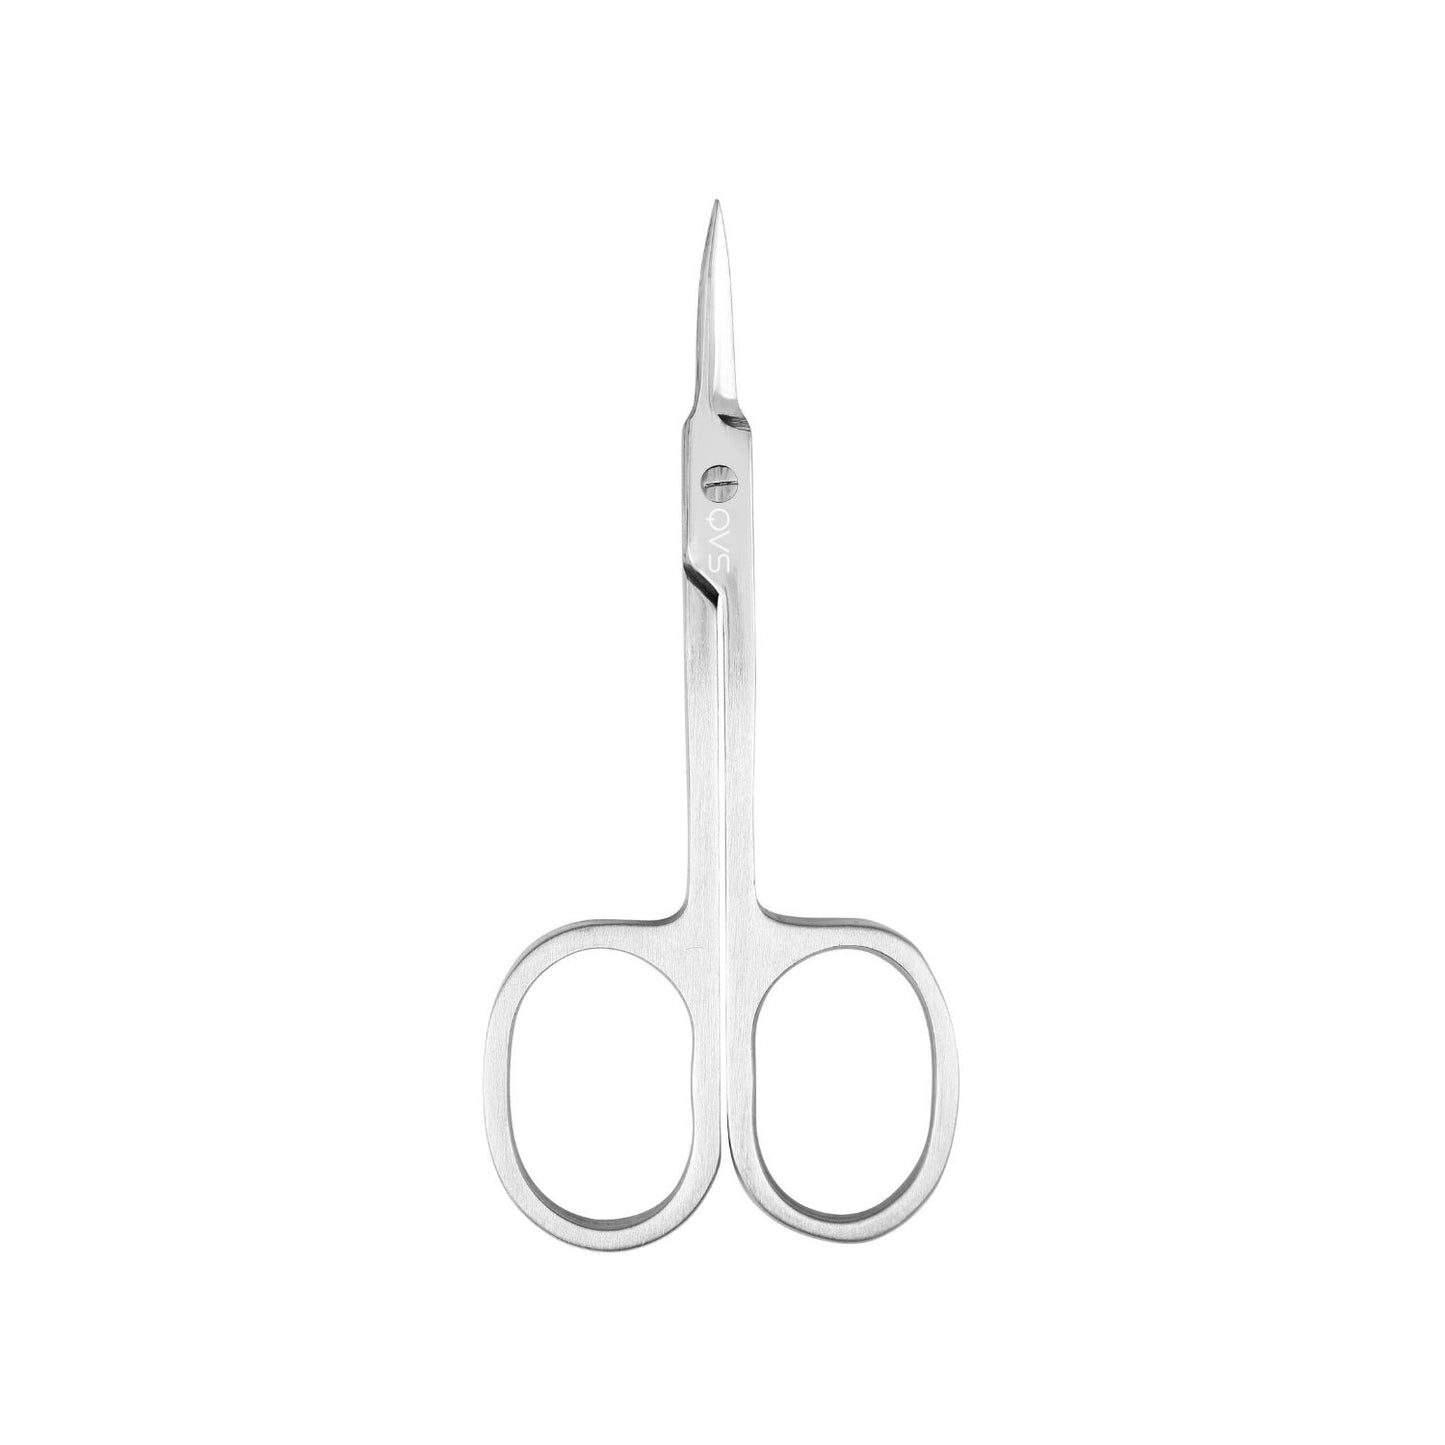 Cuticle Scissors - curved blades